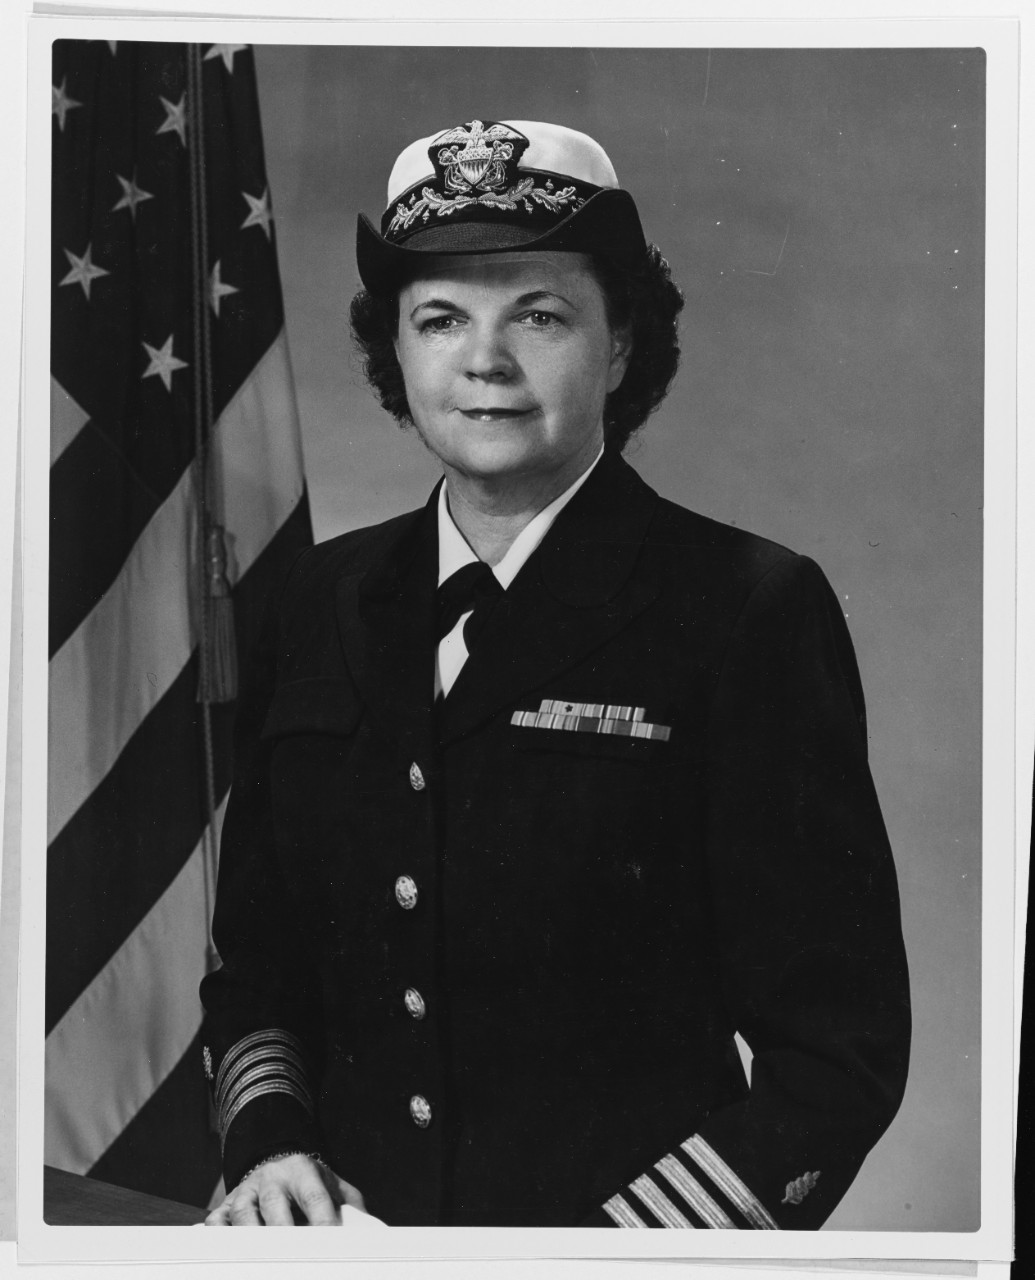 Captain Ruth A. Houghton, USN